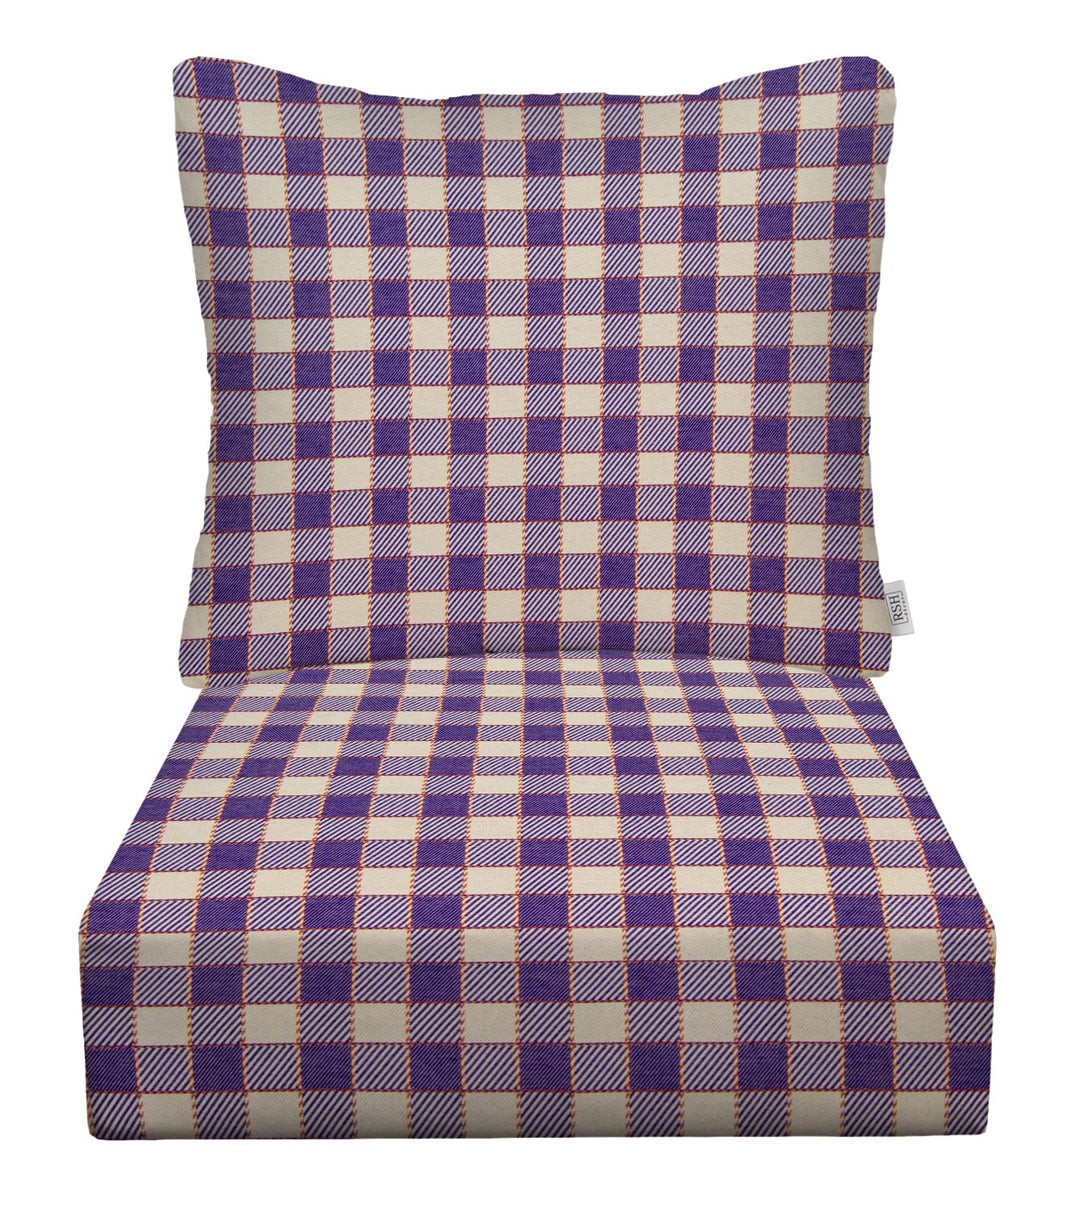 Deep Seating Pillow Back Chair Cushion Set, 25" x 25" x 5" Seat and 25" x 21" Back, Sunbrella Patterns - RSH Decor